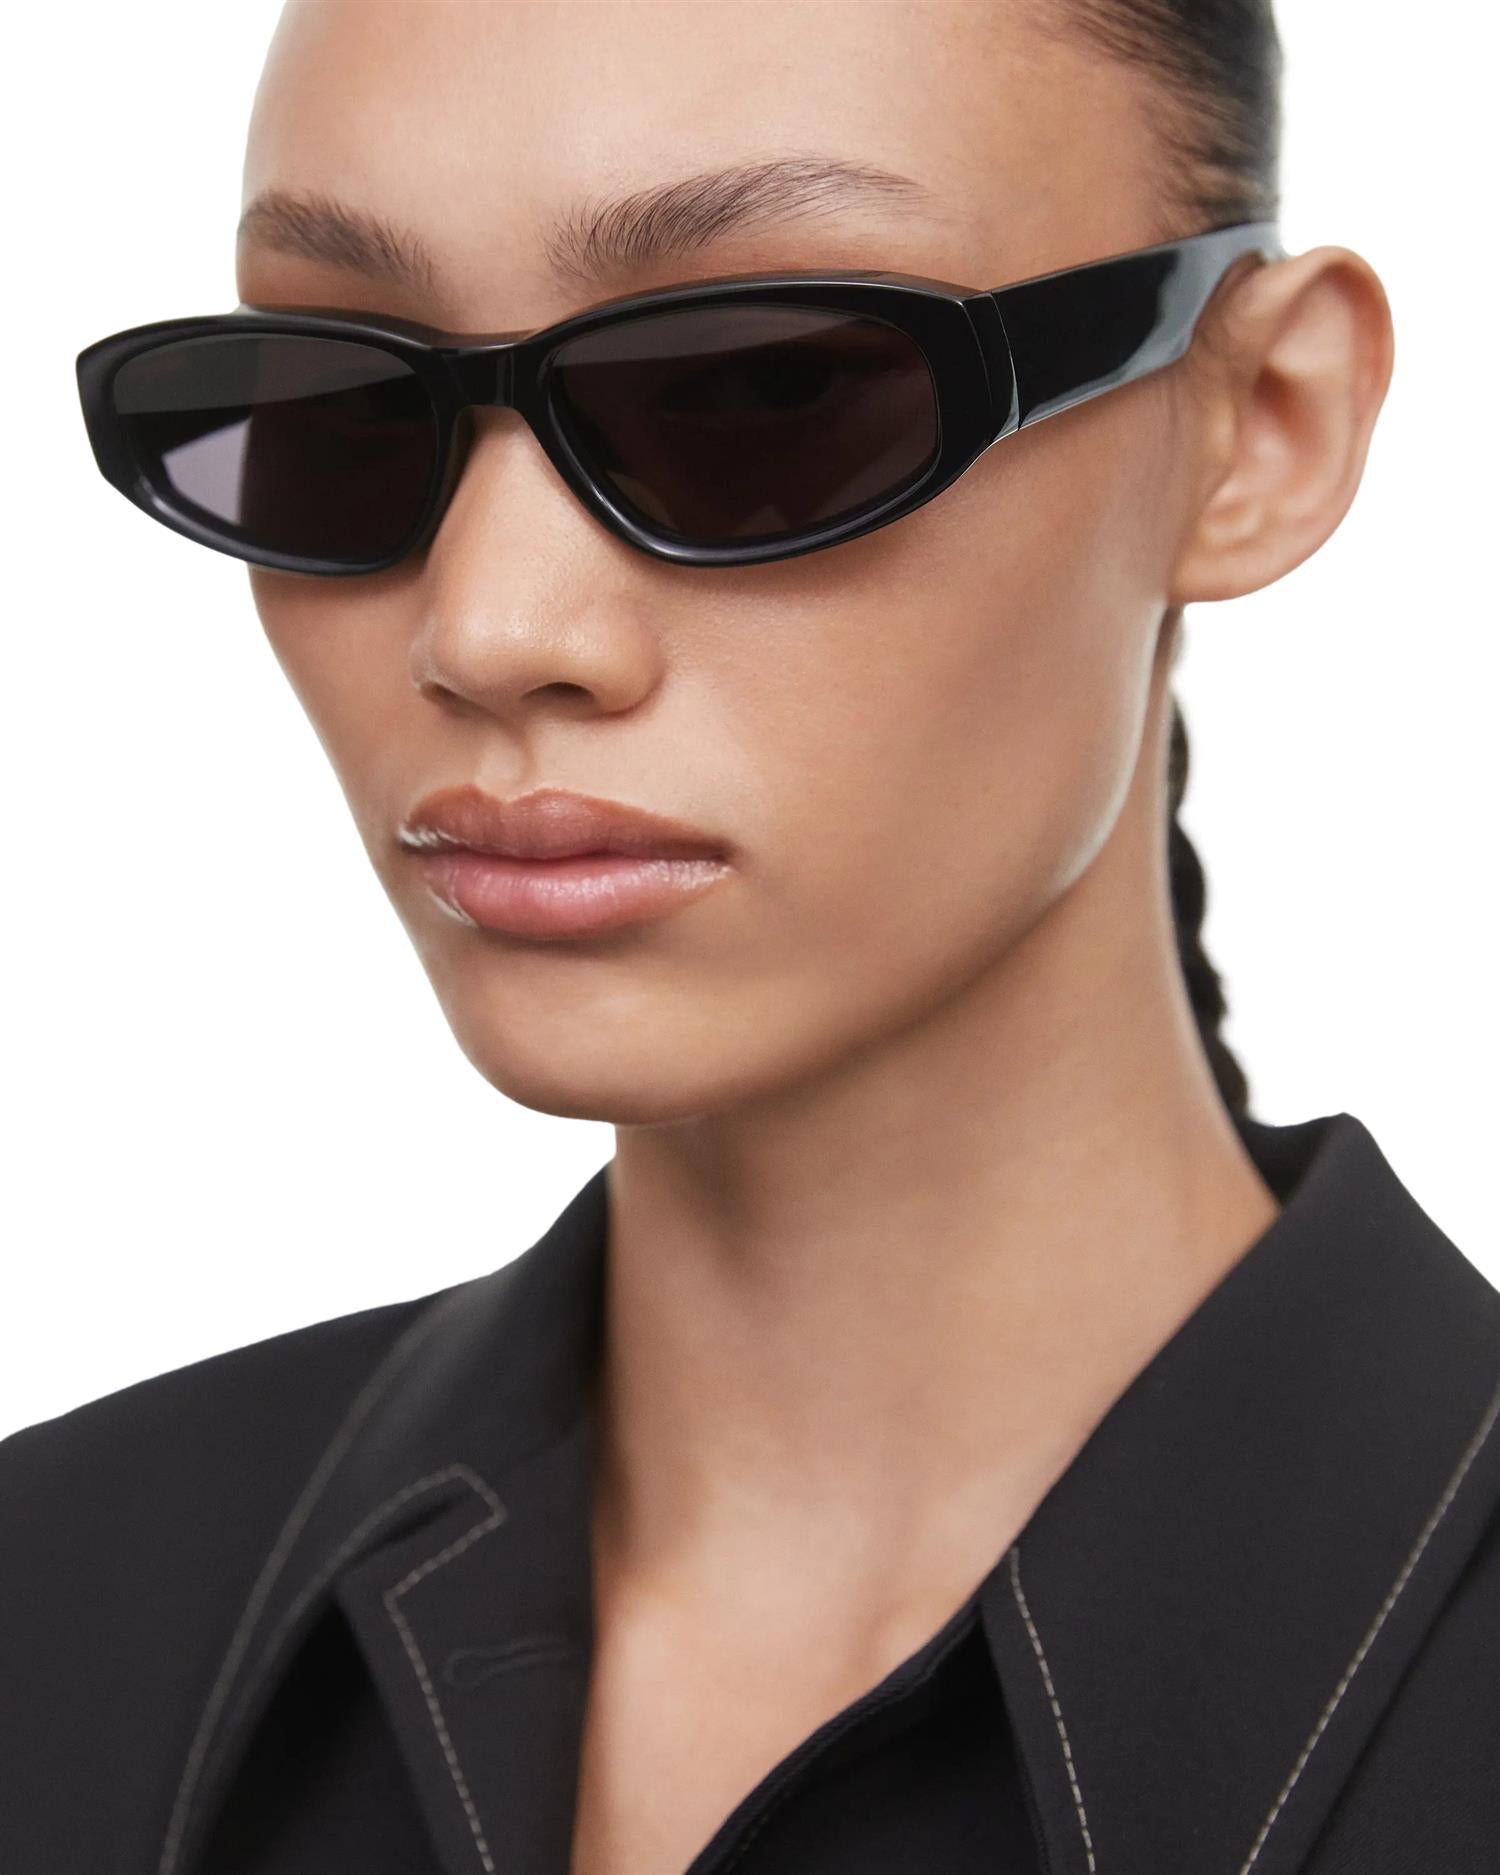 Chimi Eyewear 09 Black Solbriller Sort